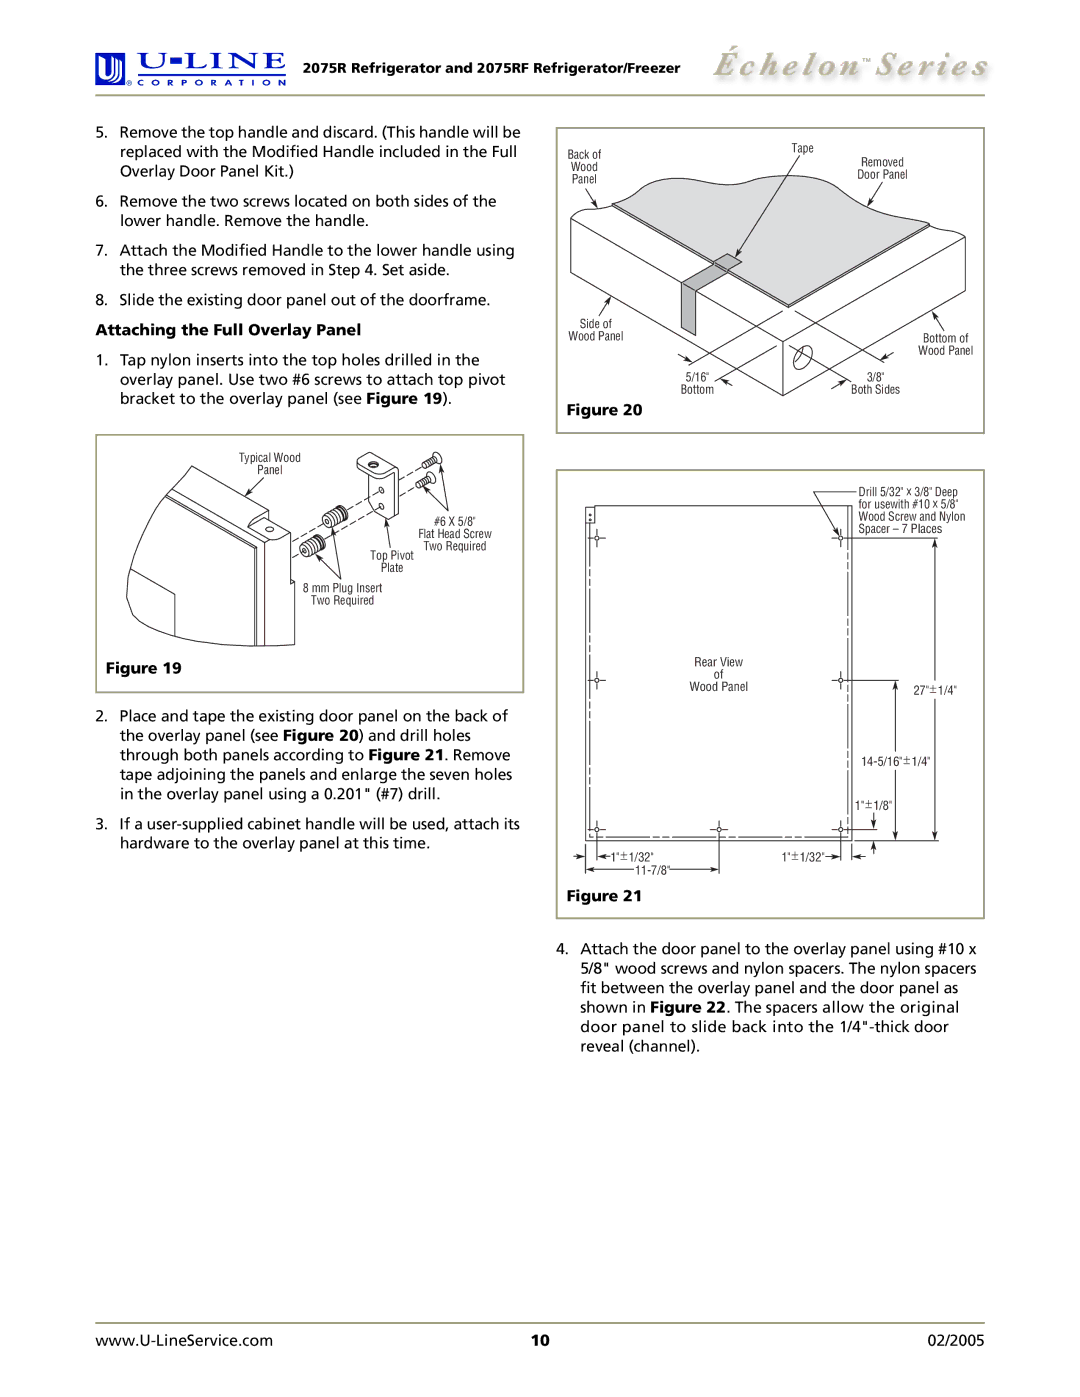 U-Line 2075RF manual Attaching the Full Overlay Panel 